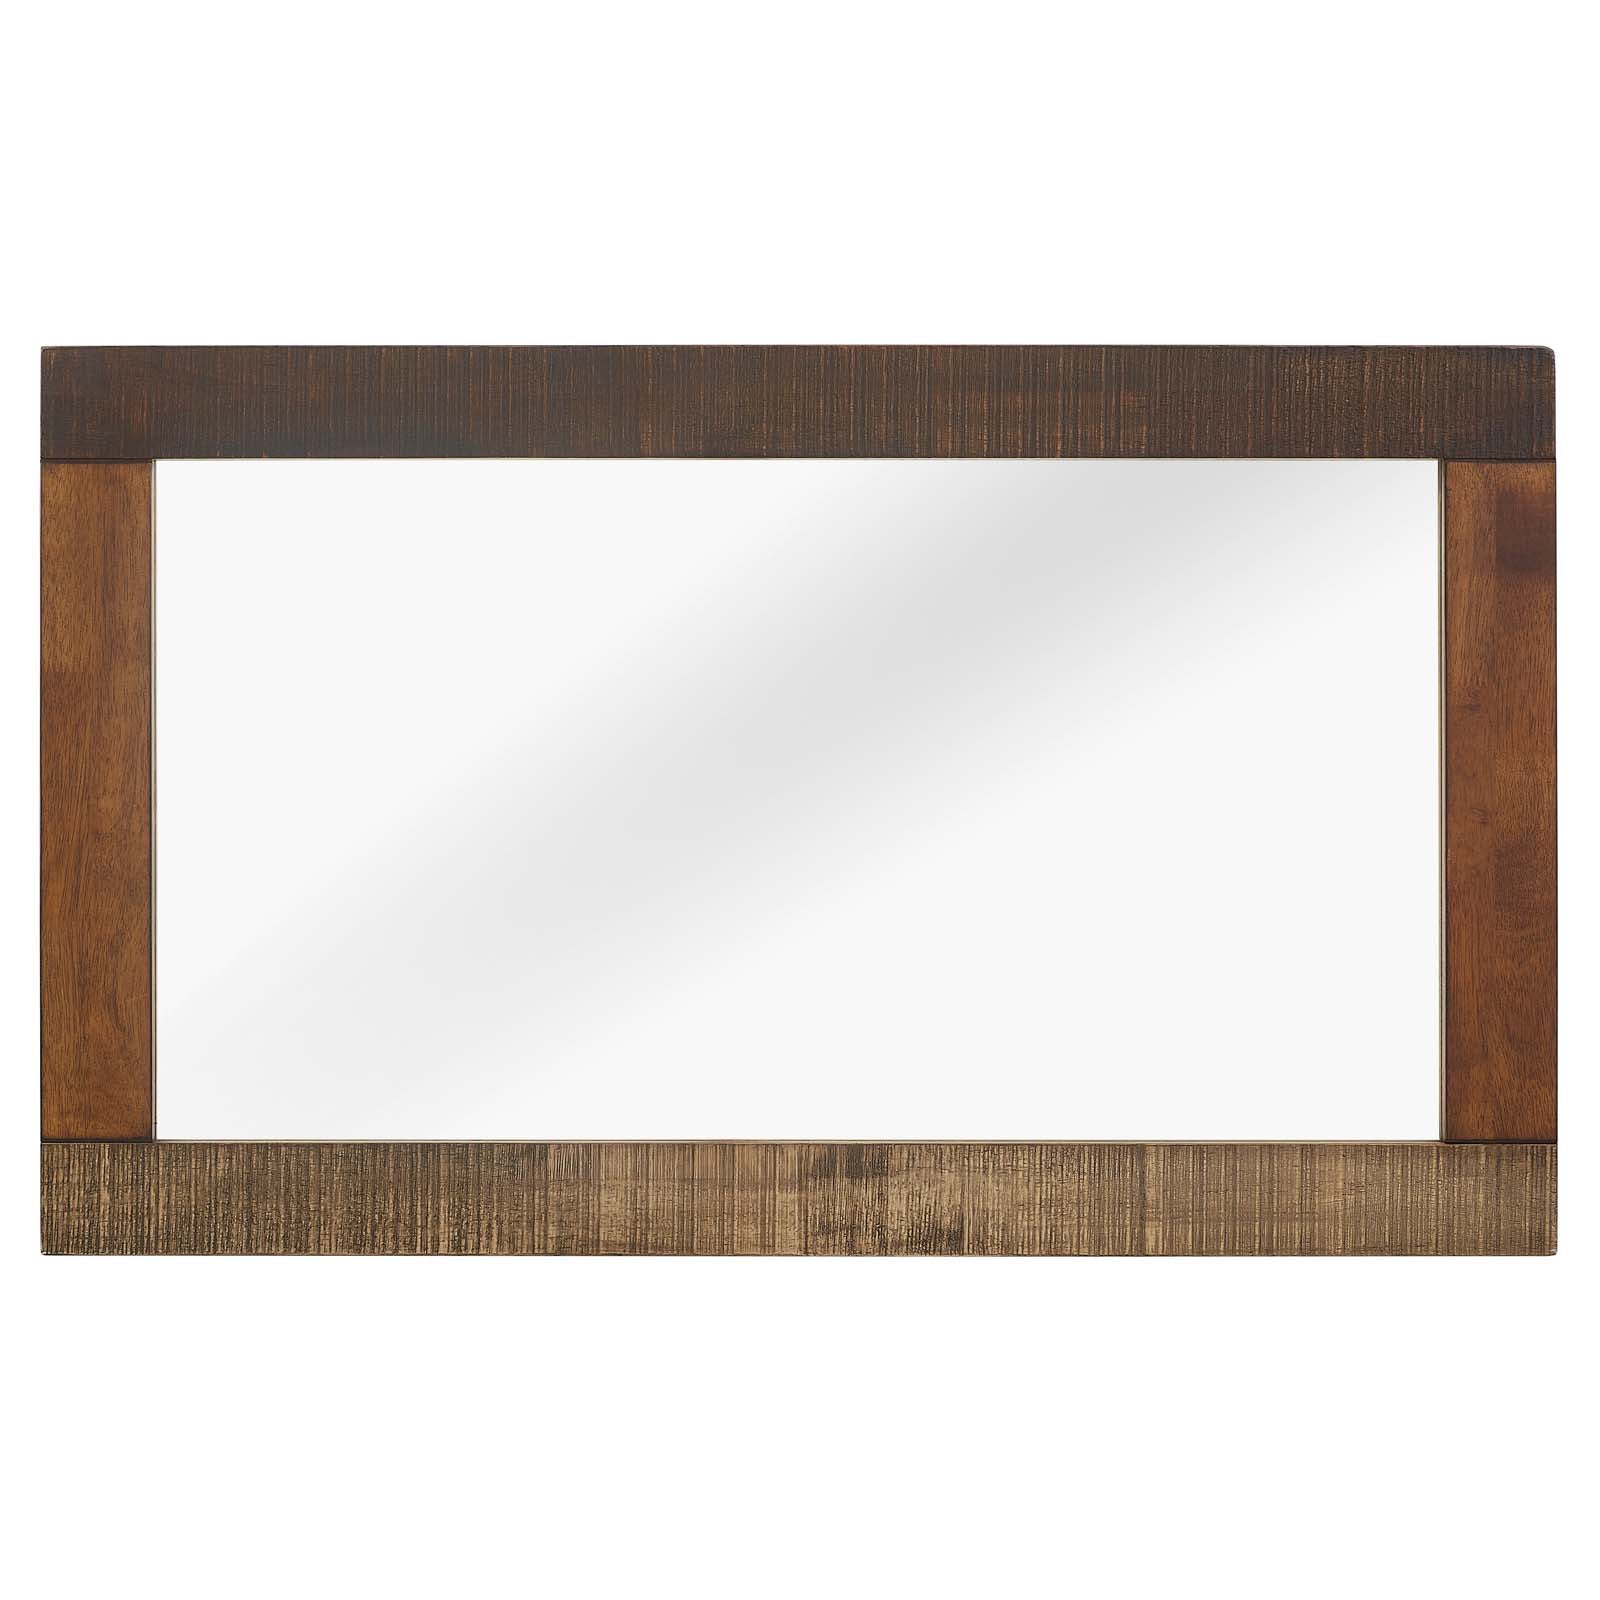 Arwen Rustic Wood Frame Mirror in Walnut - East Shore Modern Home Furnishings